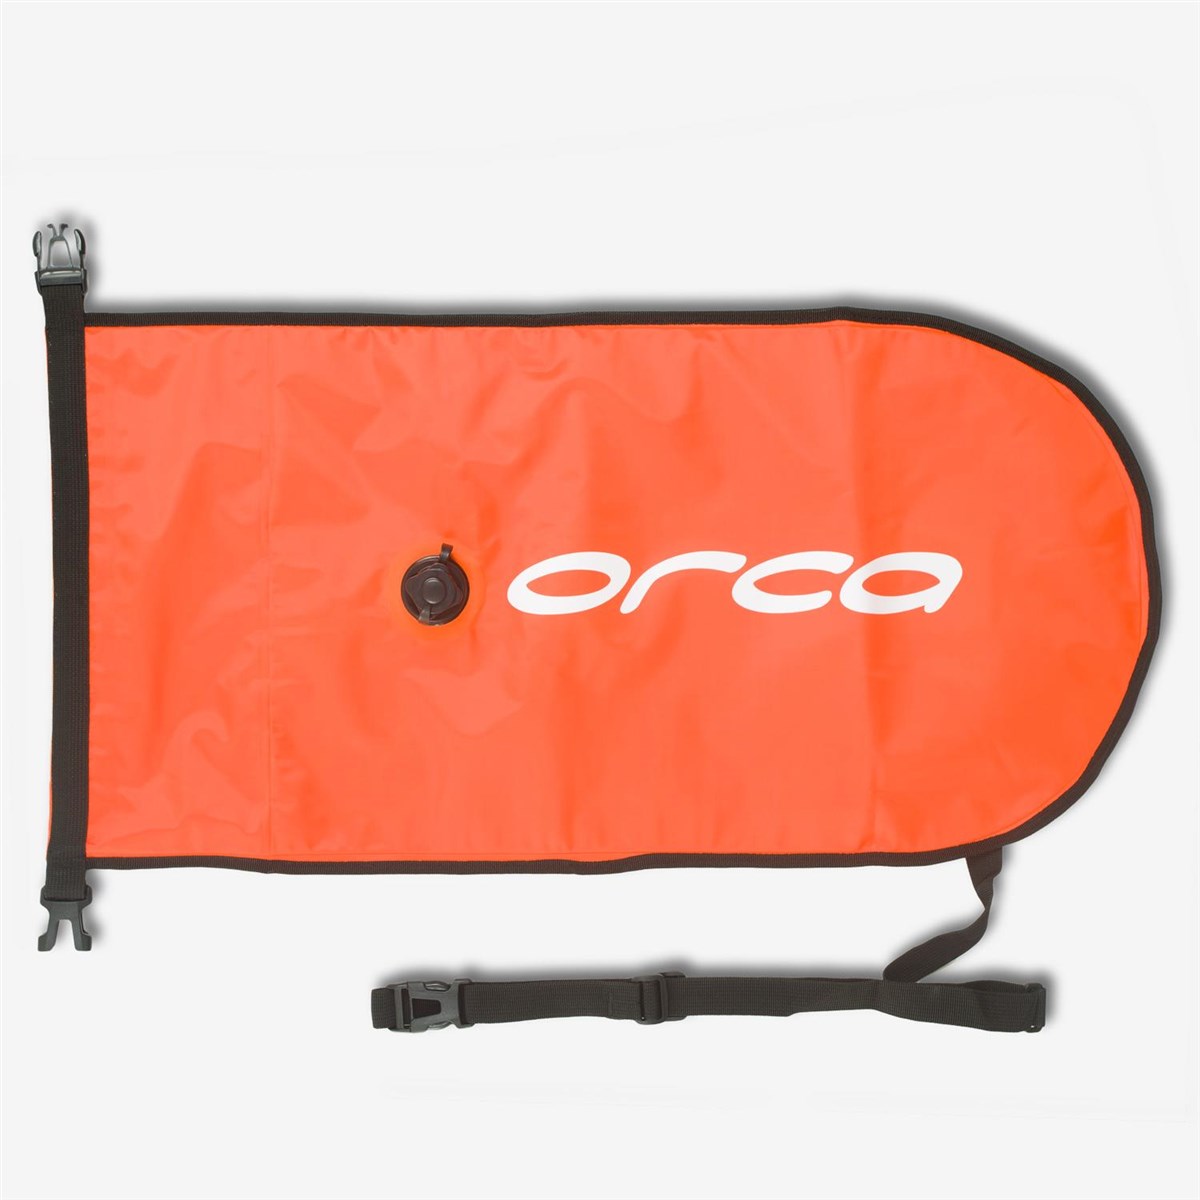 Orca Safety Buoy product image